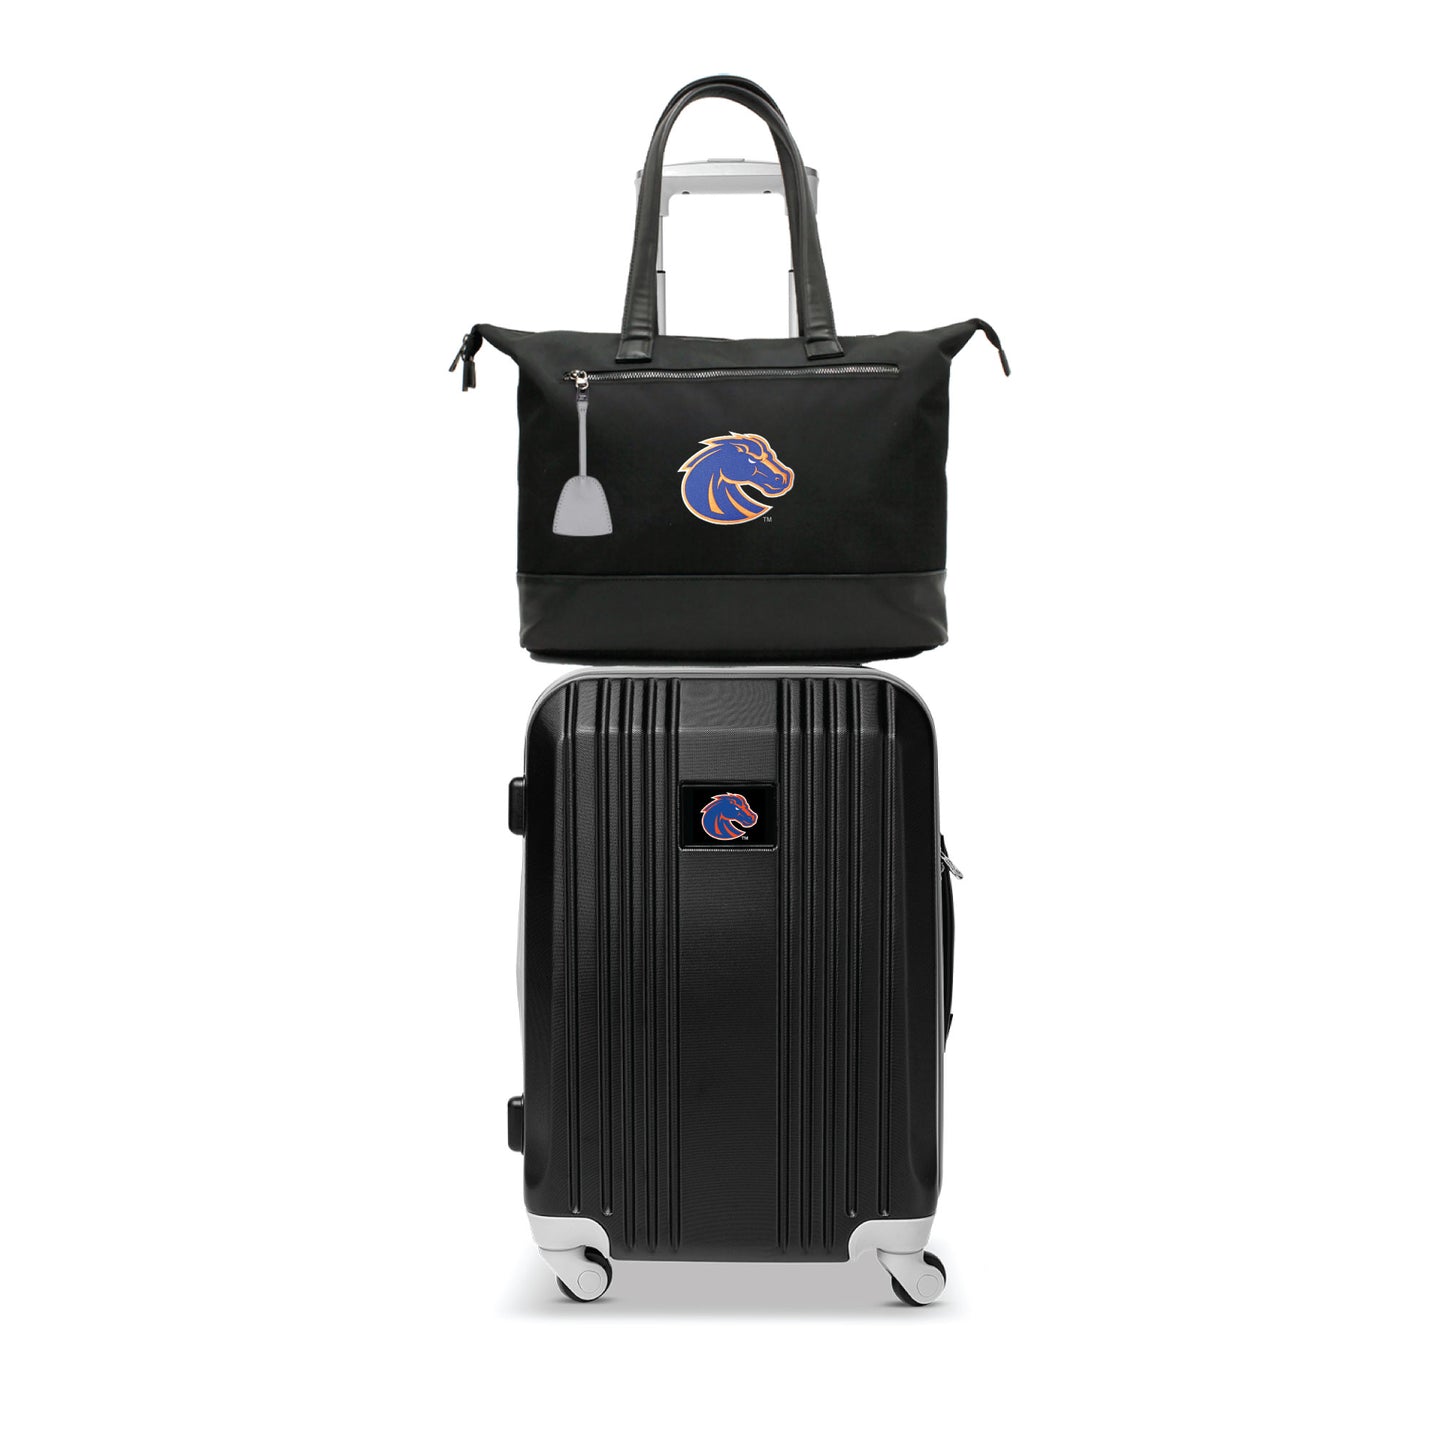 Boise State Broncos Premium Laptop Tote Bag and Luggage Set